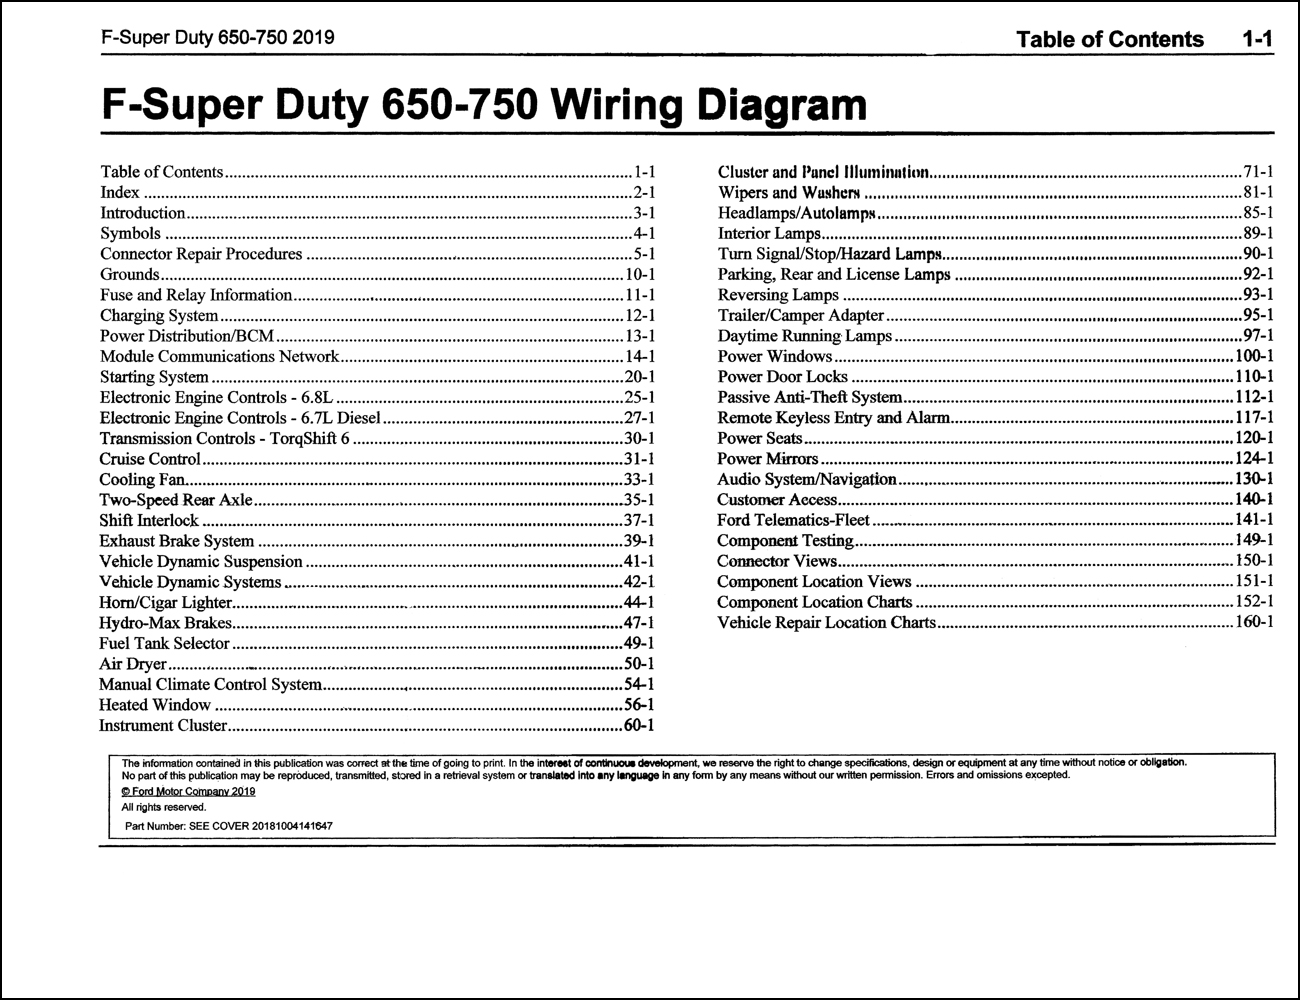 2019 Ford F-650 and F-750 Super Duty Truck Wiring Diagram Manual Original